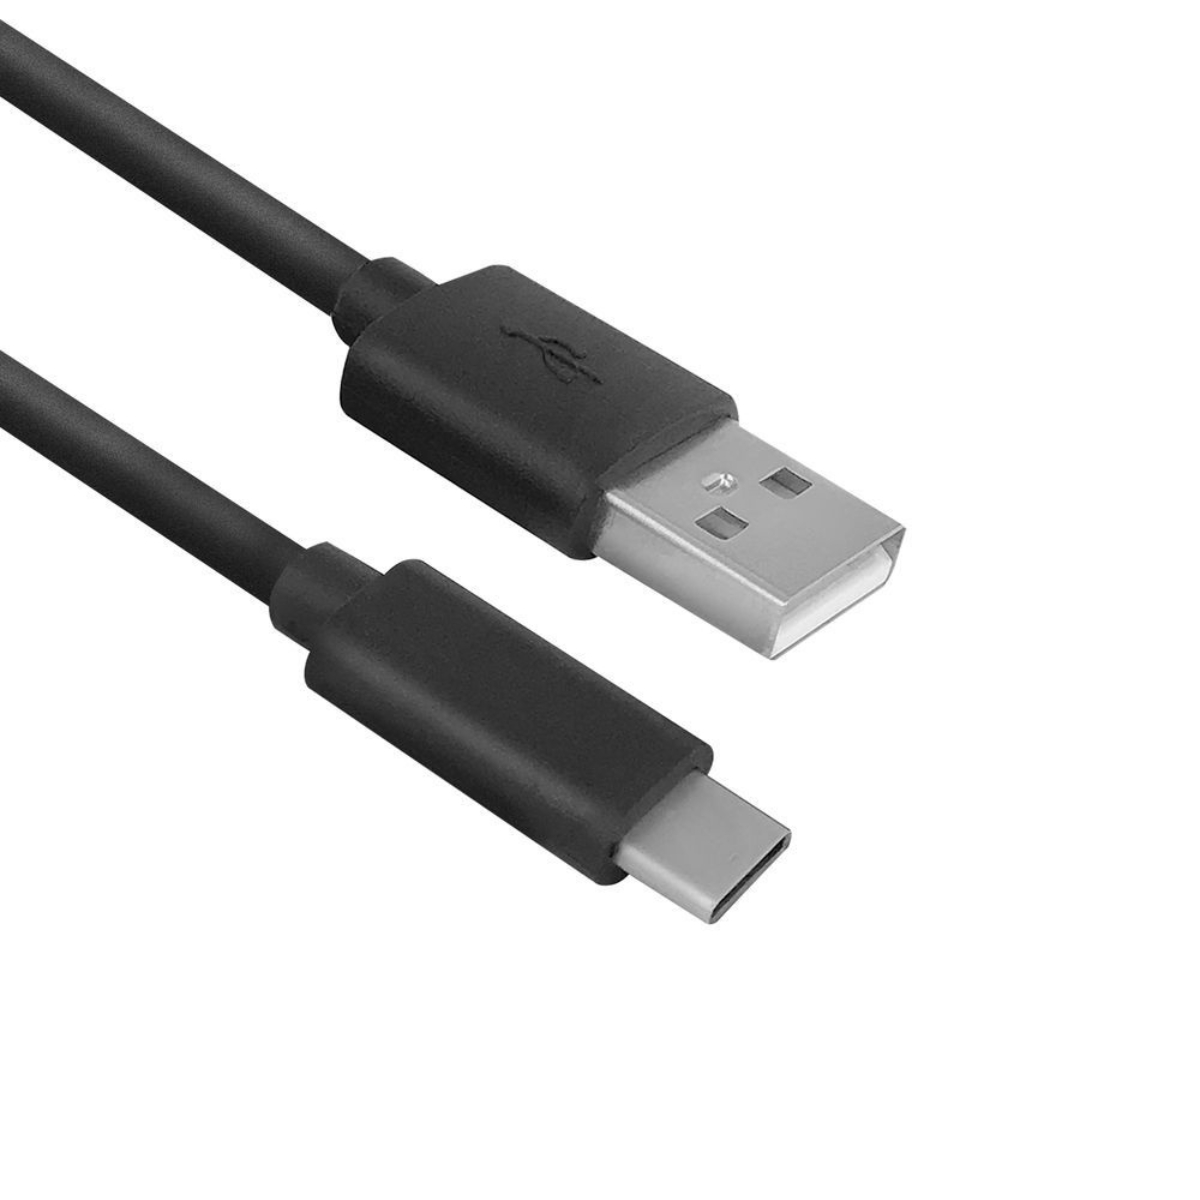 Stecker/USB-A 2.0 1 Meter - Kabel ACT Stecker USB-C USB USB-C AC7350 Kabel